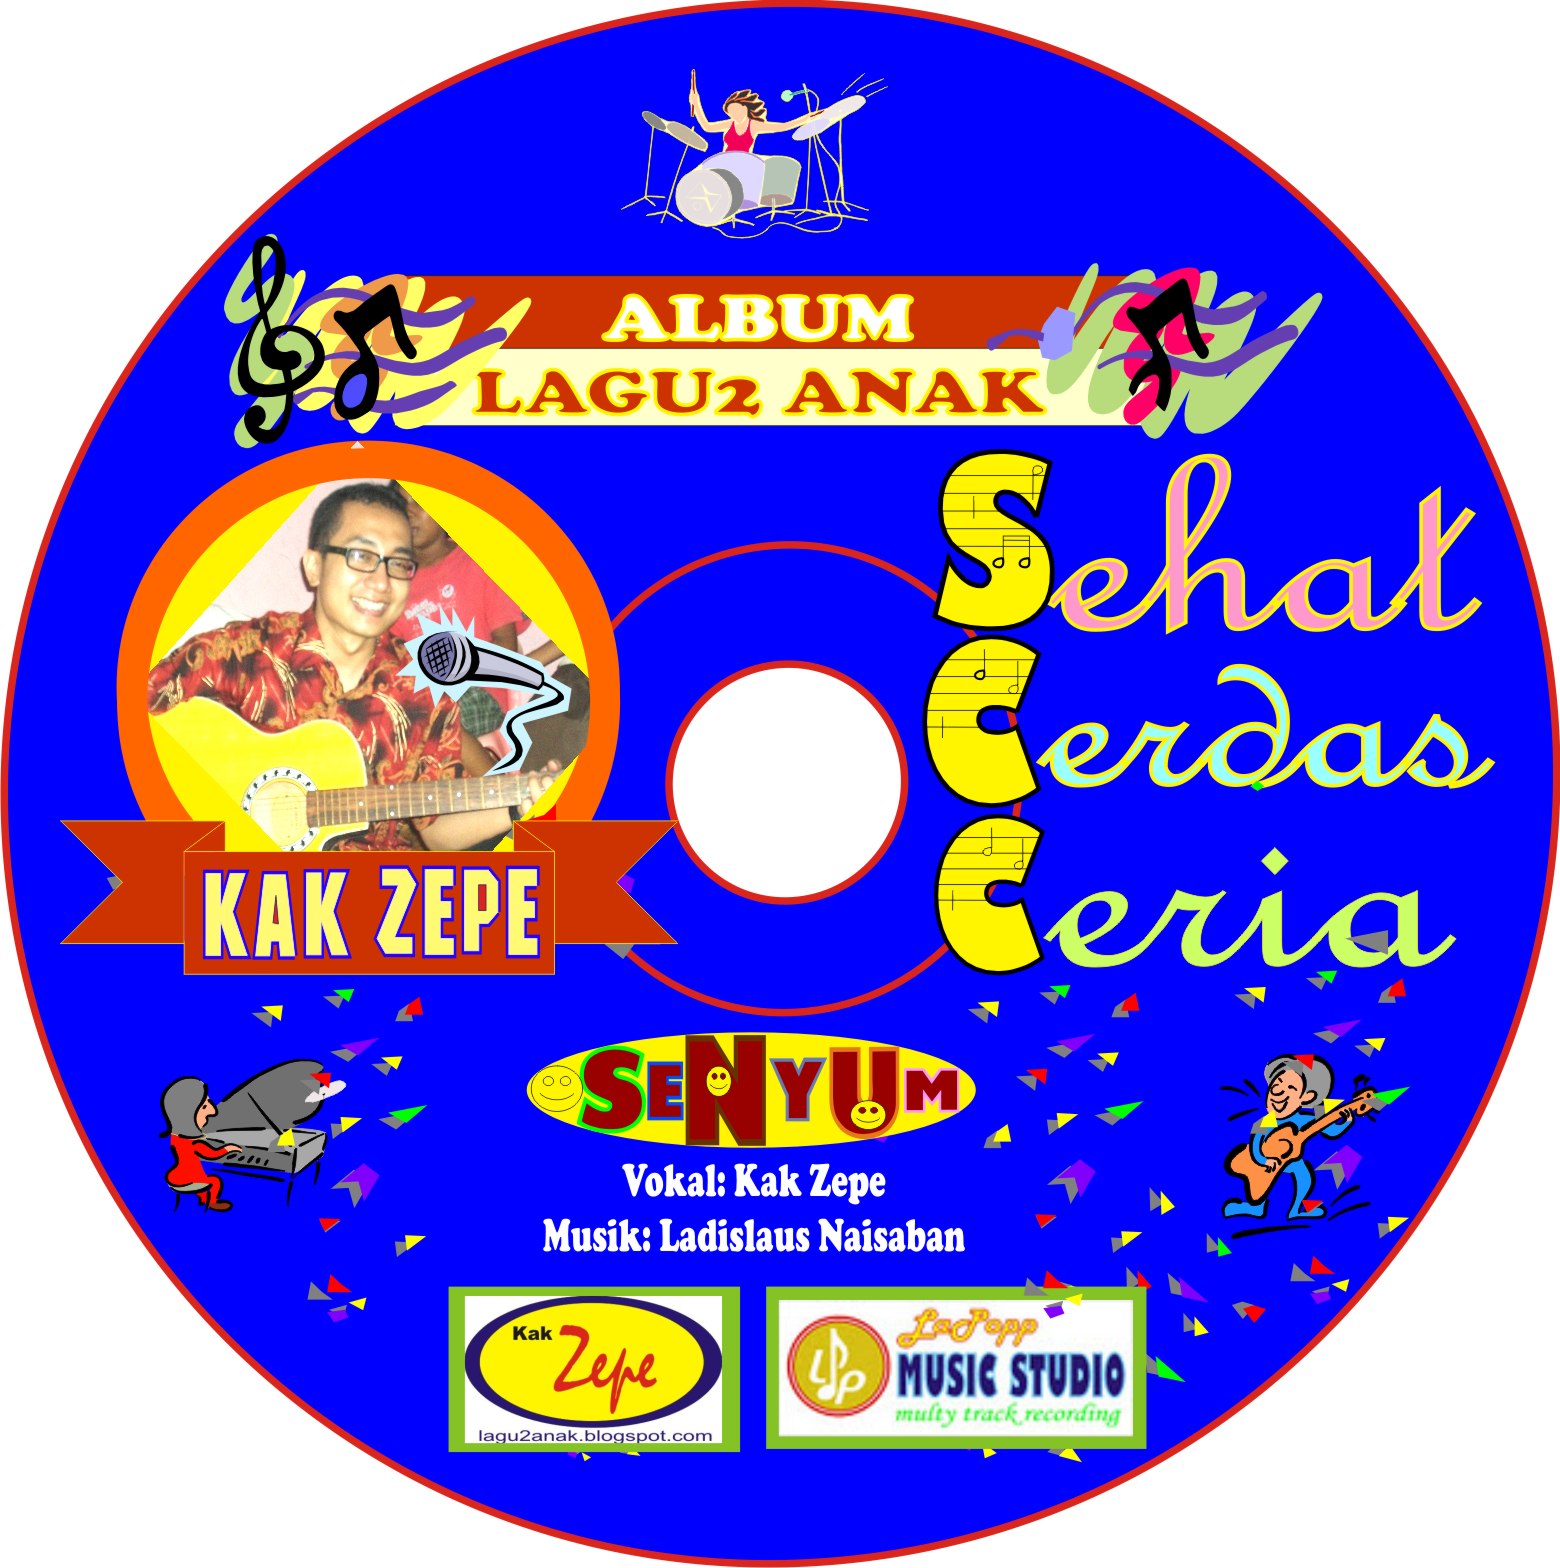 Download Lagu Anak Bahasa Indonesia & Inggris,dongeng,cerita,TK,SD,MP3